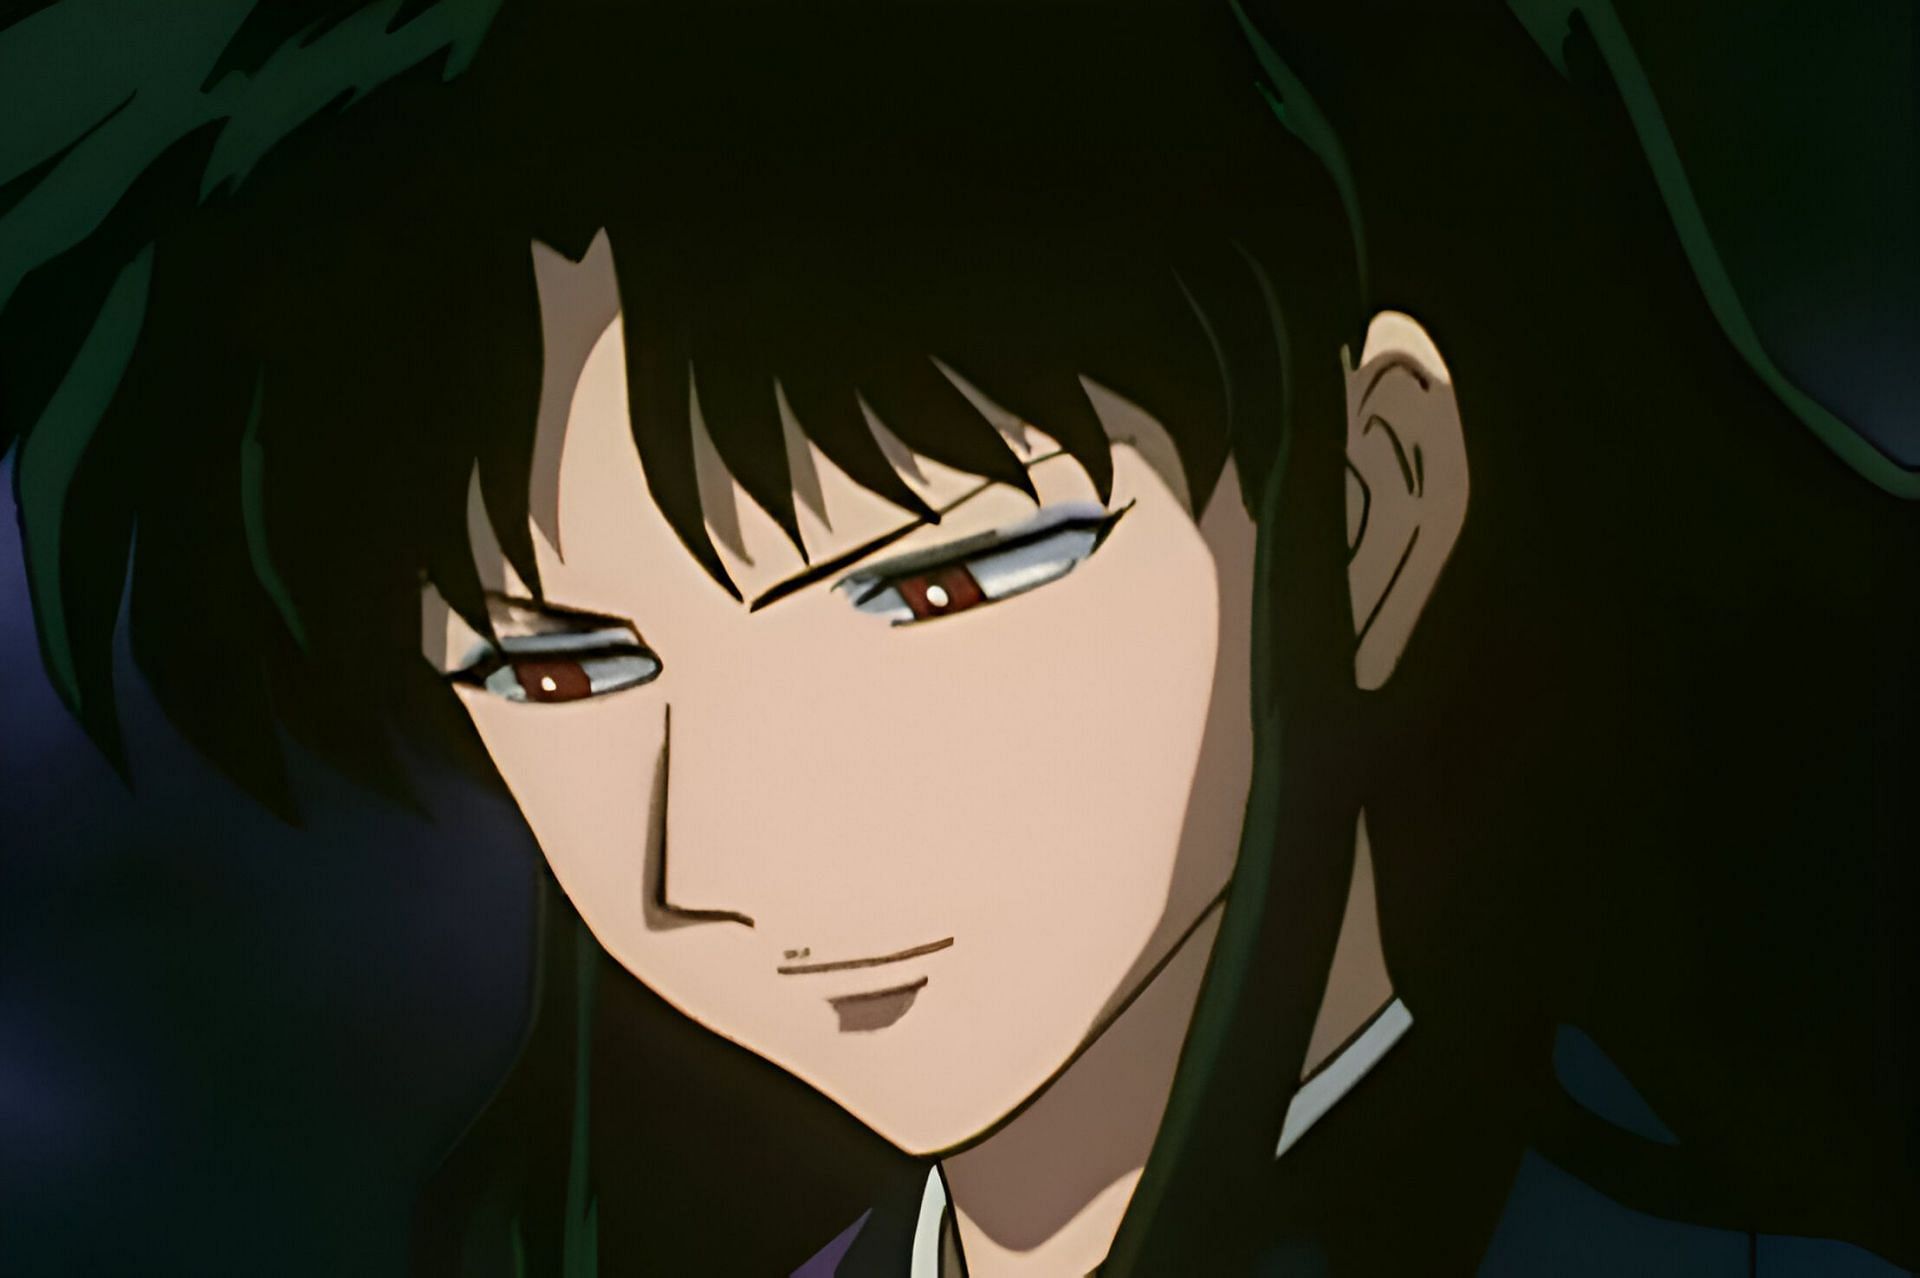 Naruku as seen in the anime (Image via Sunrise)